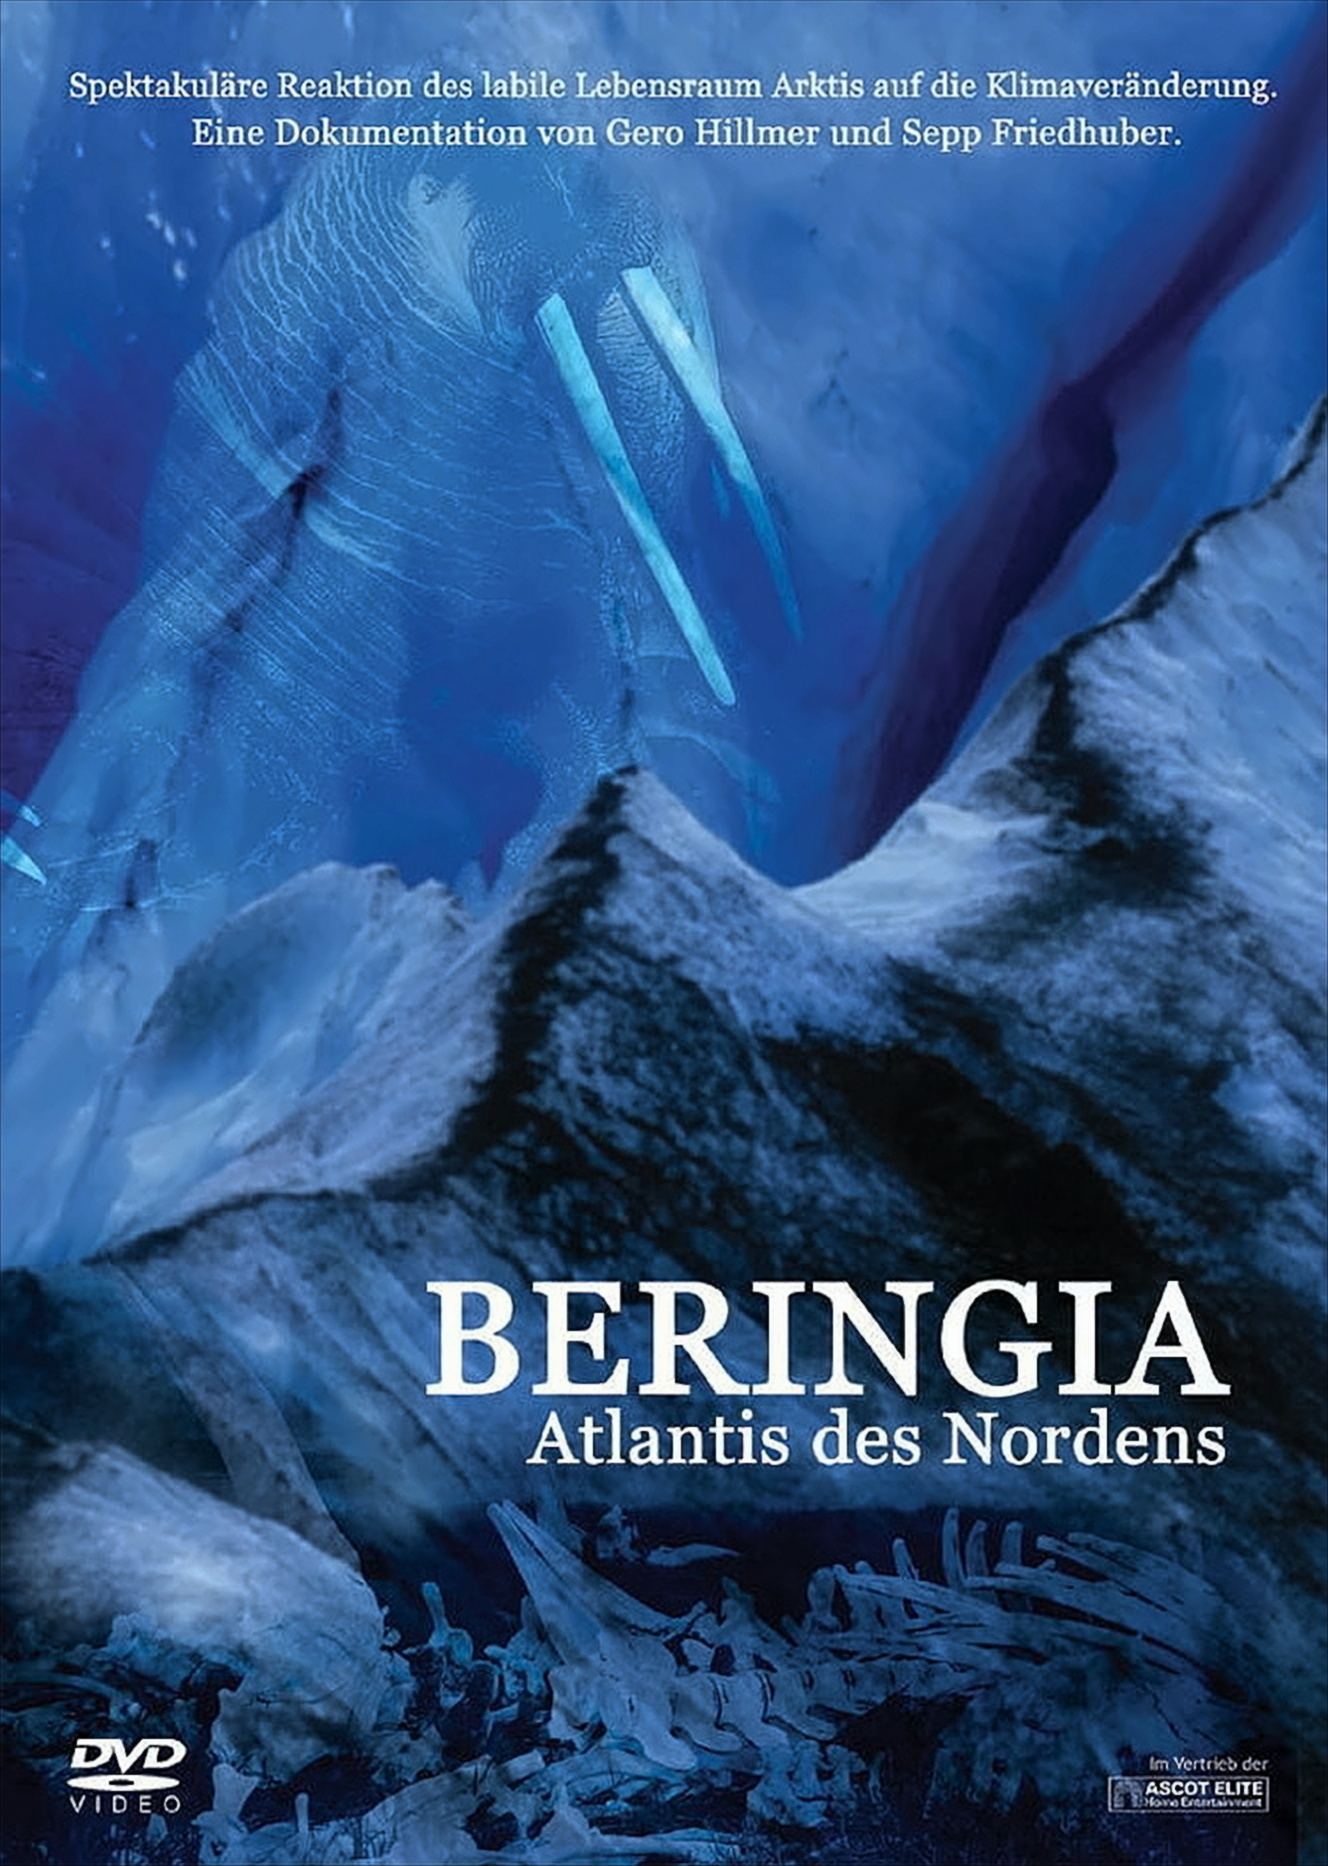 Beringia DVD Atlantis - Nordens des